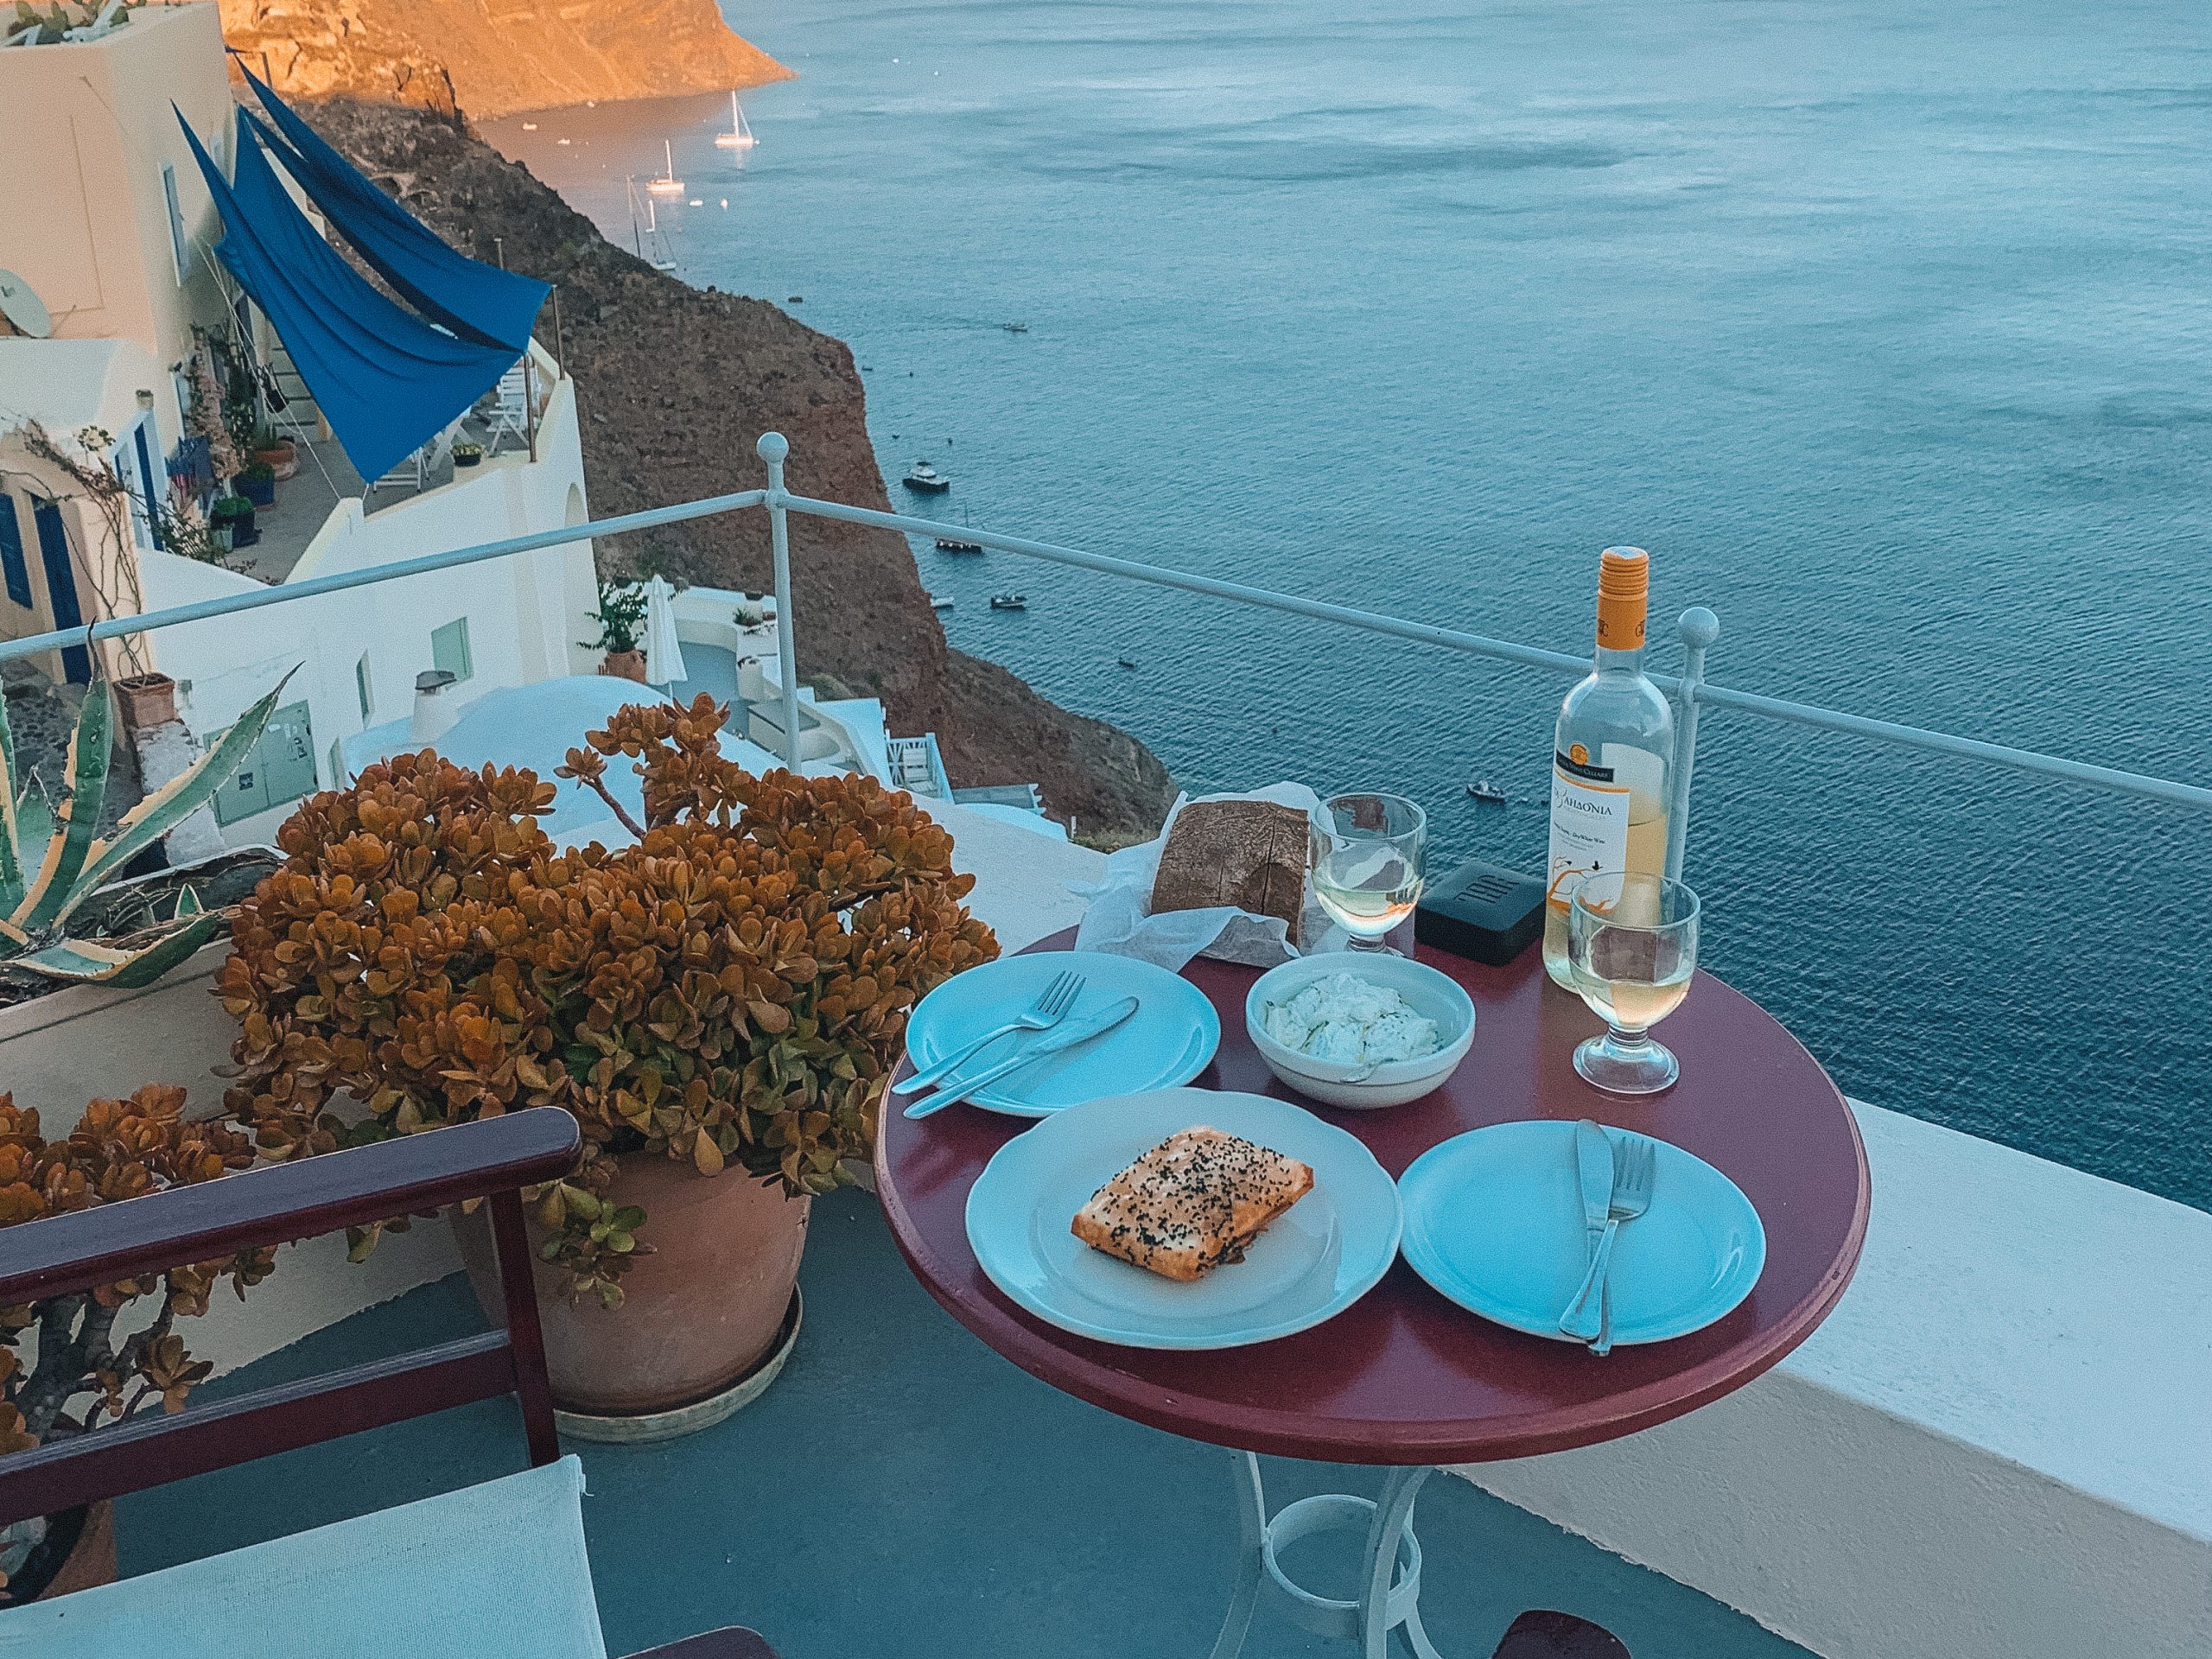 Fried saganaki and wine on the balcony